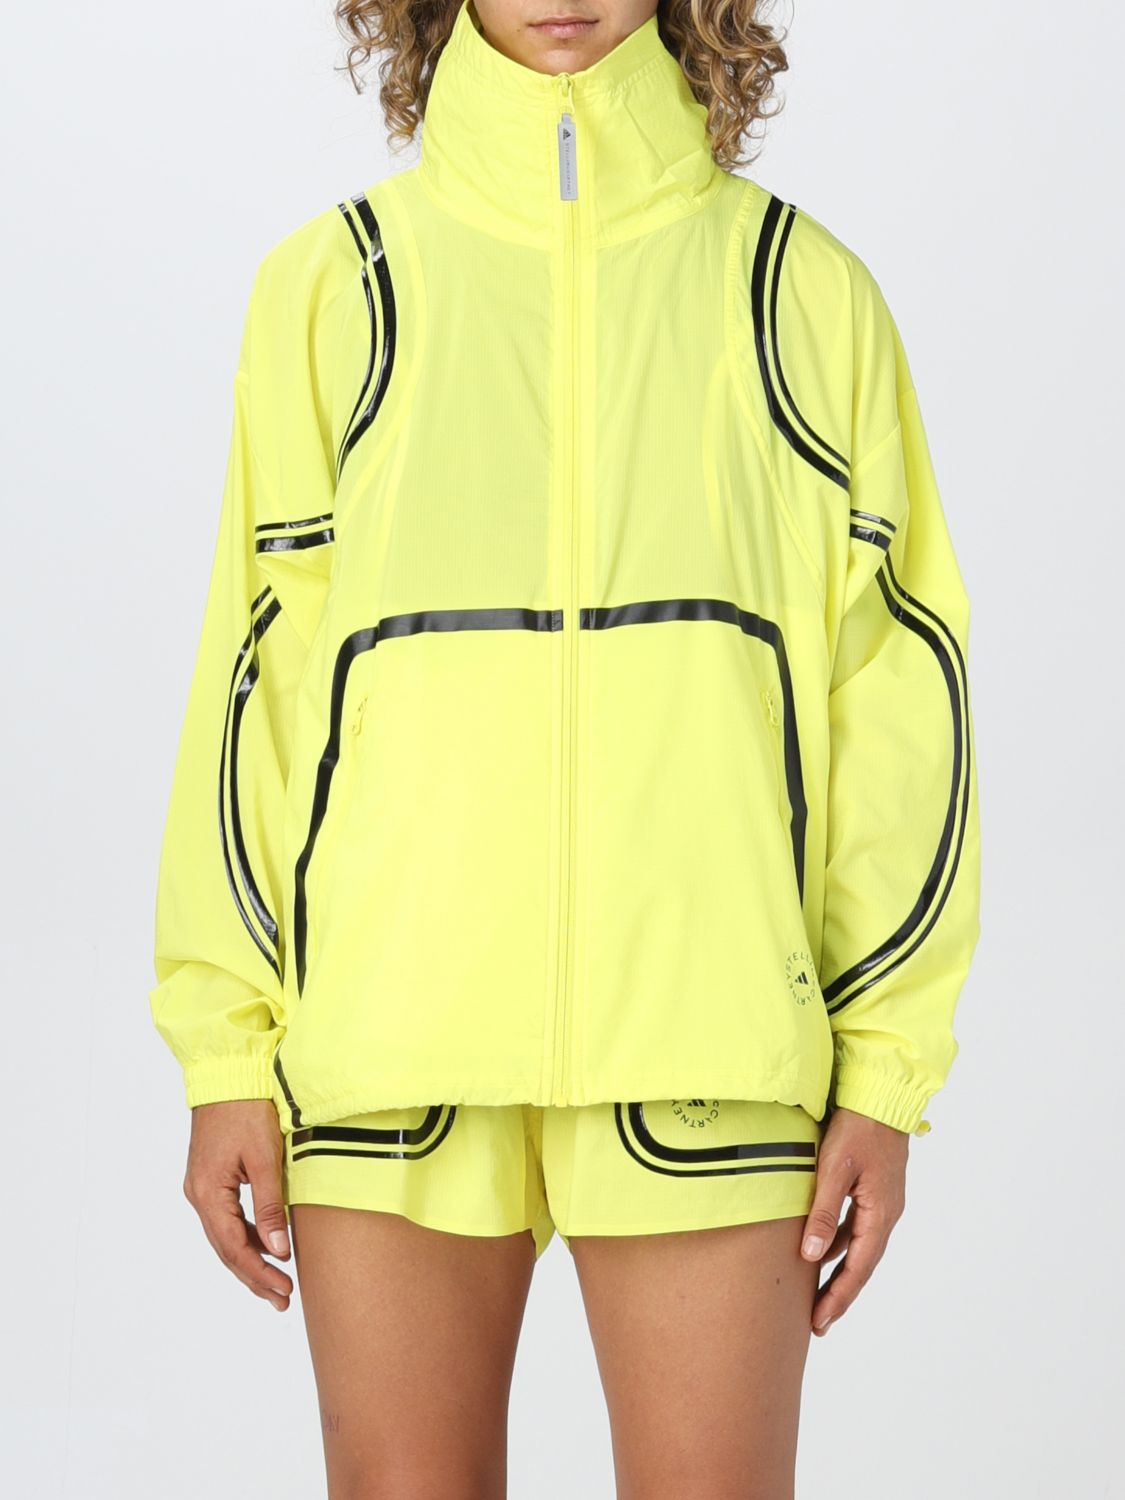 adidas by Stella McCartney Fleece Jacquard Winter Jacket - Yellow, Women's  Training